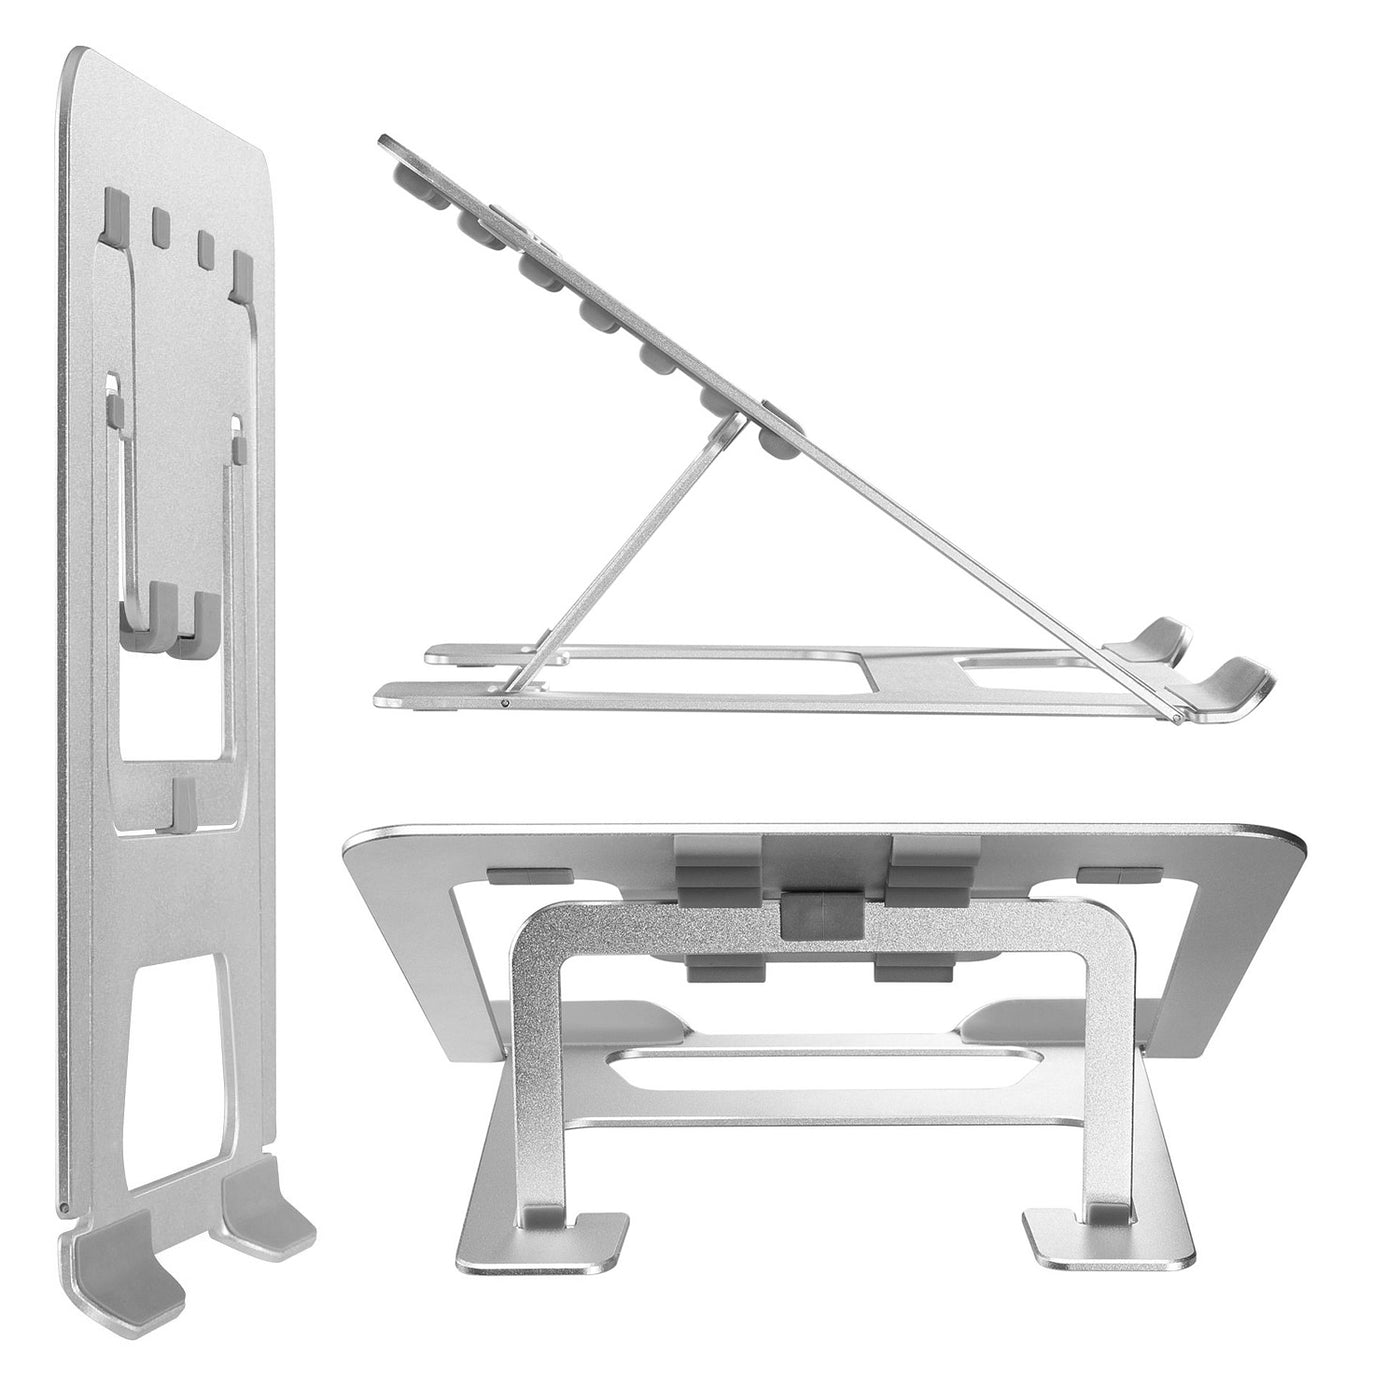 ERGOOFFICE ER-416 Ultra-thin Foldable Laptop Stand